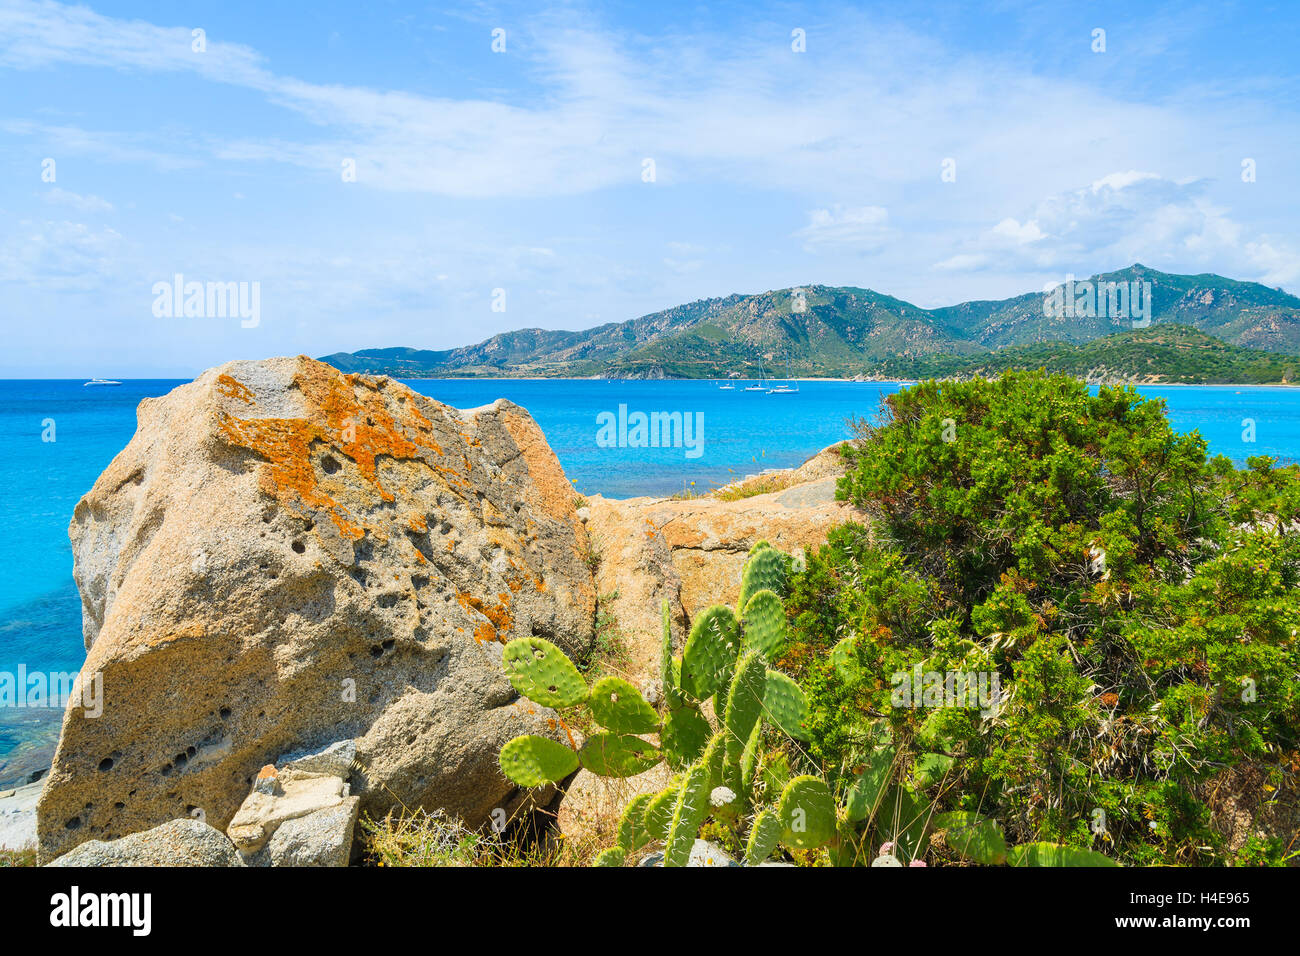 Rocks and green plants near Spiaggia del Riso beach, Sardinia island, Italy Stock Photo